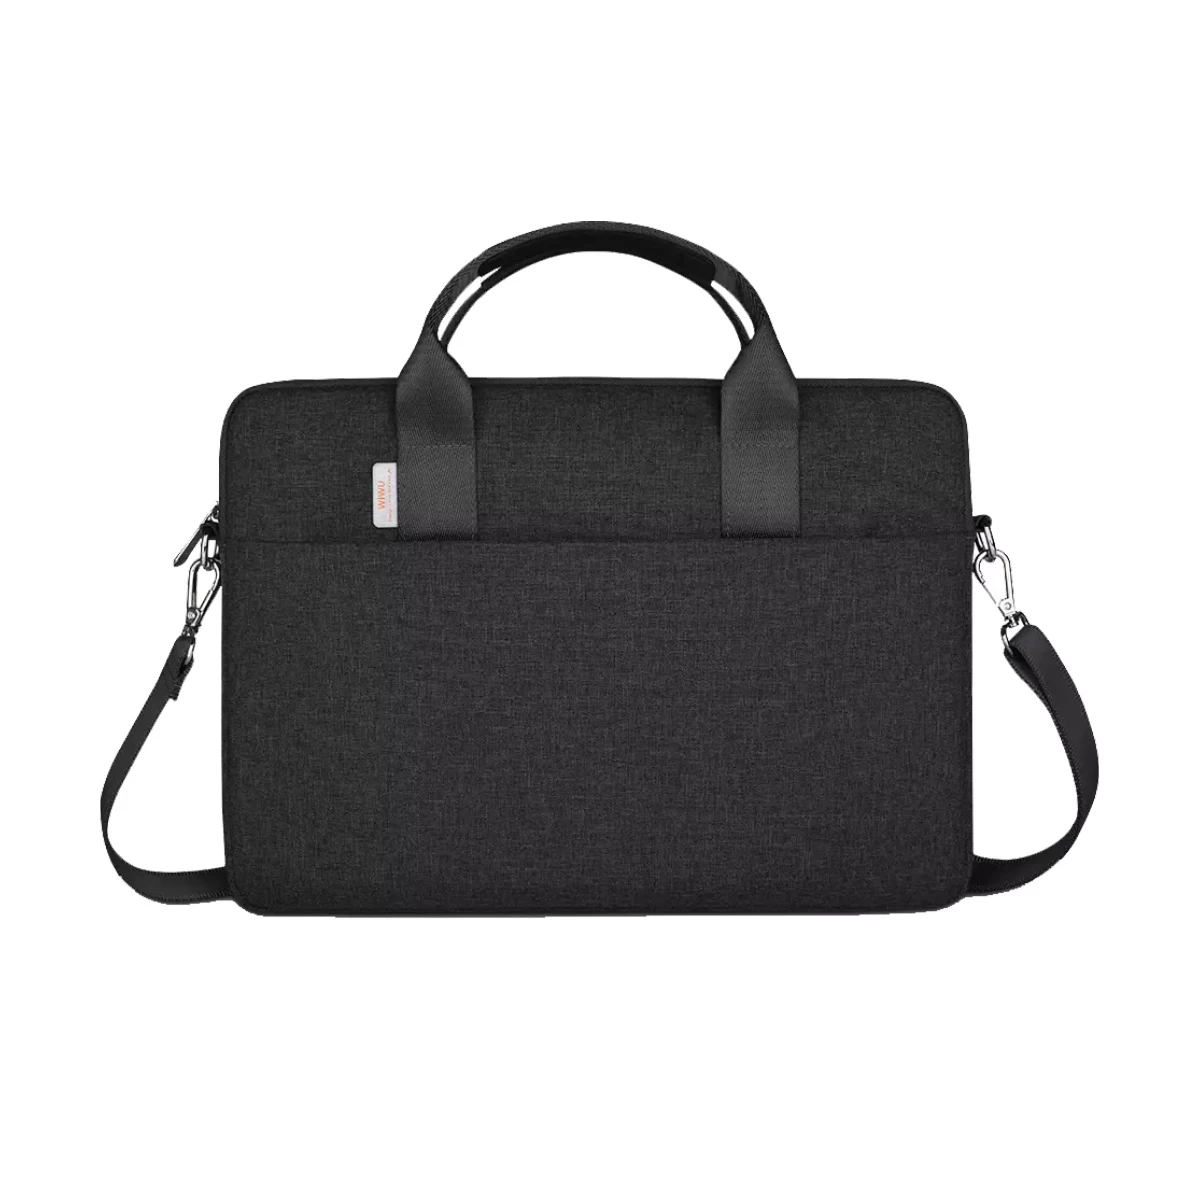 WIWU Minimalist 15.6 inch Black Laptop Bag with Detachable Shoulder Strap